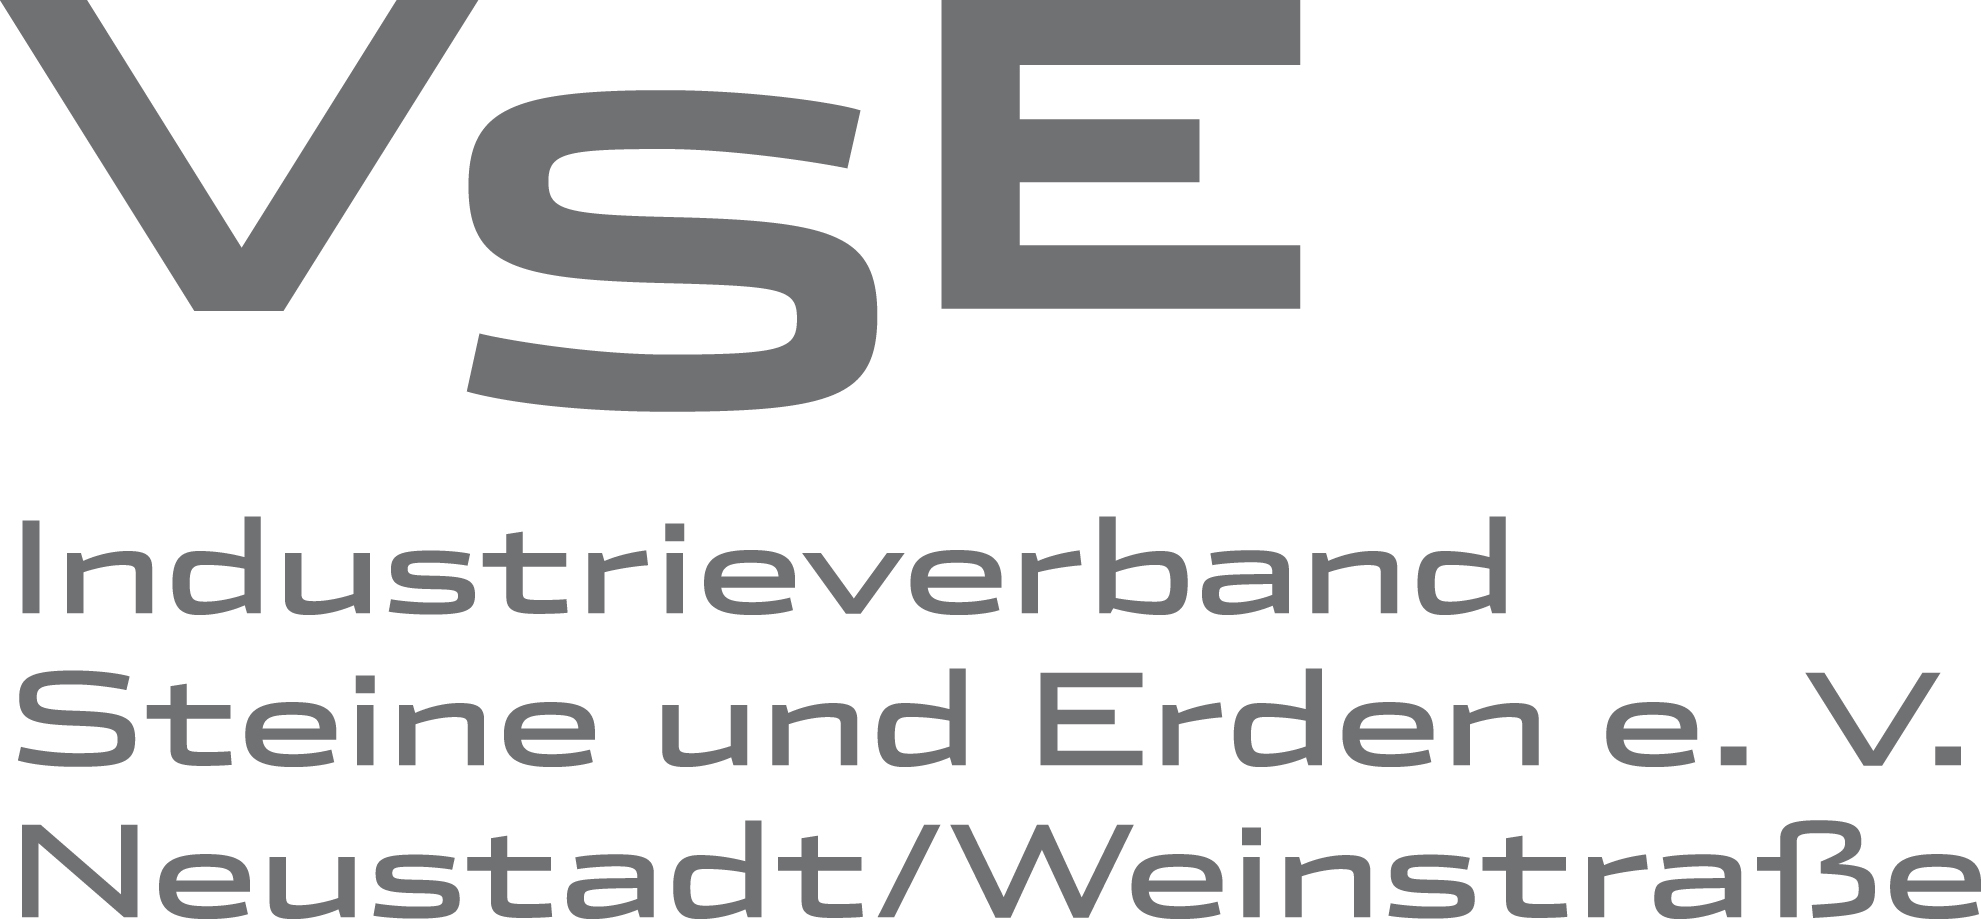 Logo-VSE-2.jpg